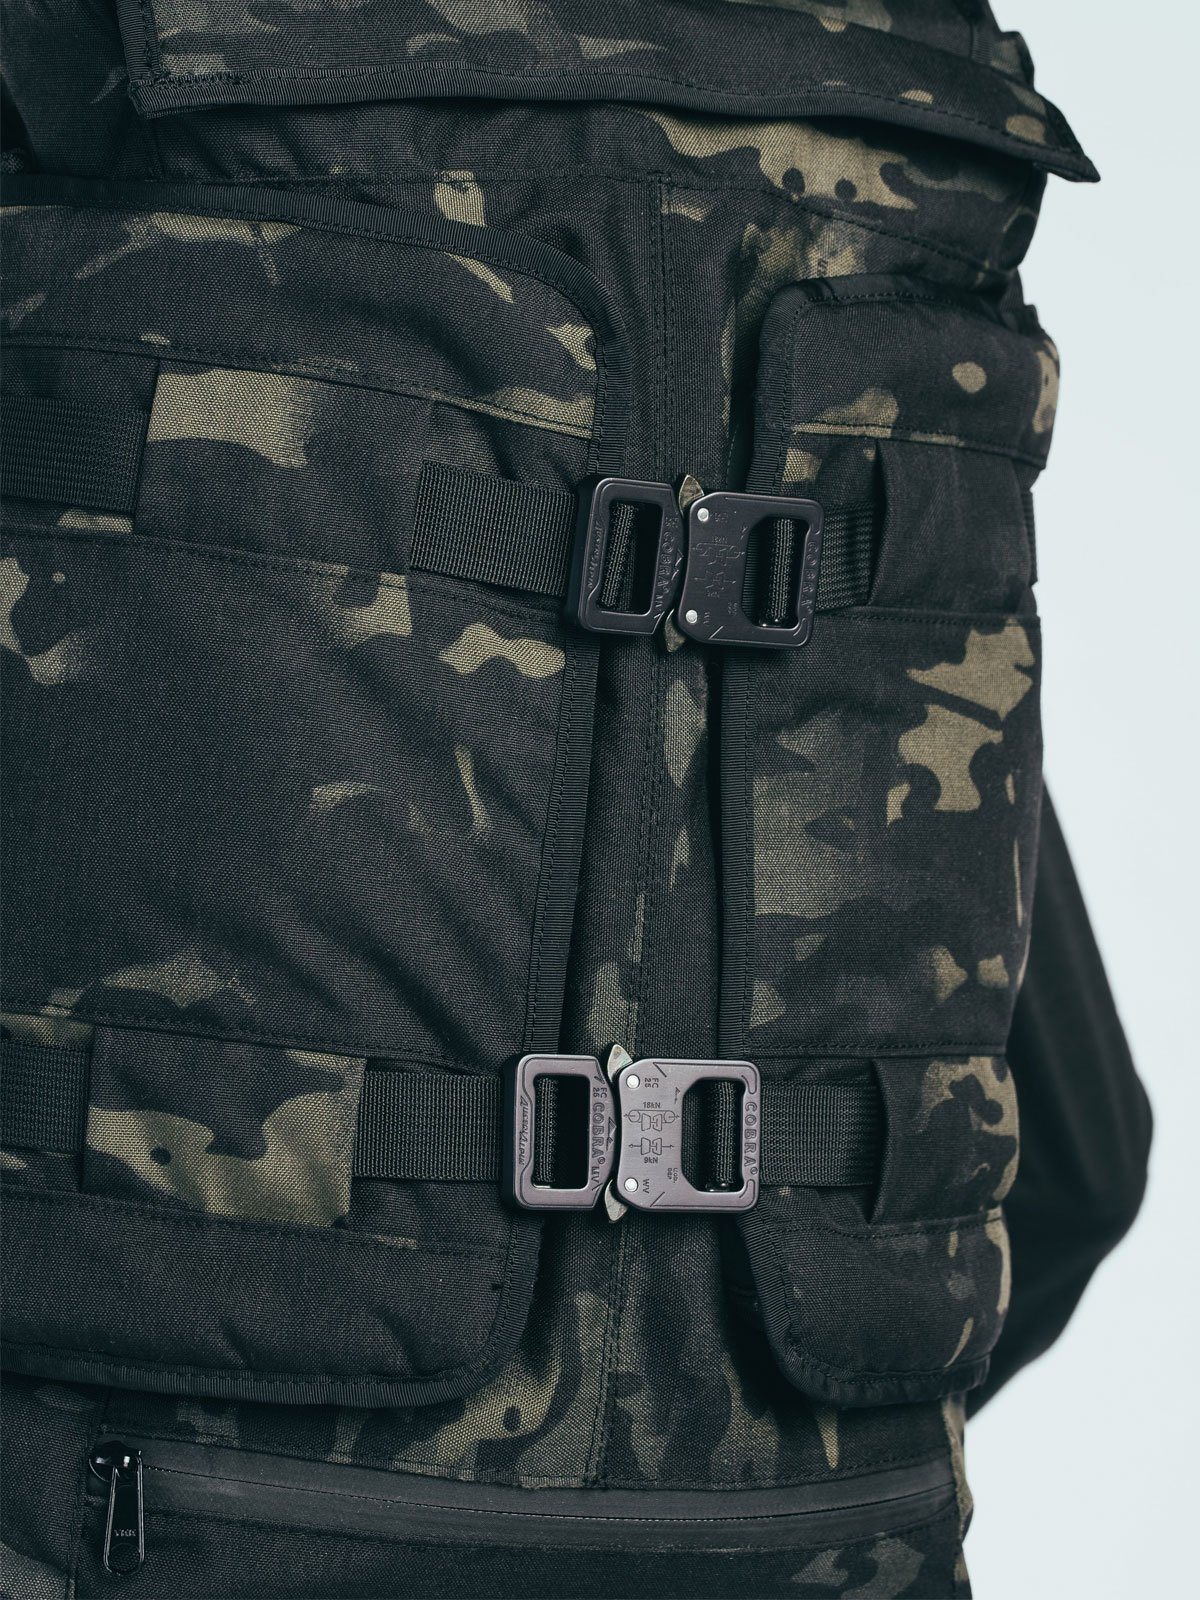 Cobra® Buckle Set : HT500 & Black Camo Rhake by Mission Workshop - Säänkestävät laukut ja tekniset vaatteet - San Francisco & Los Angeles - Kestävät - ikuisesti taattu